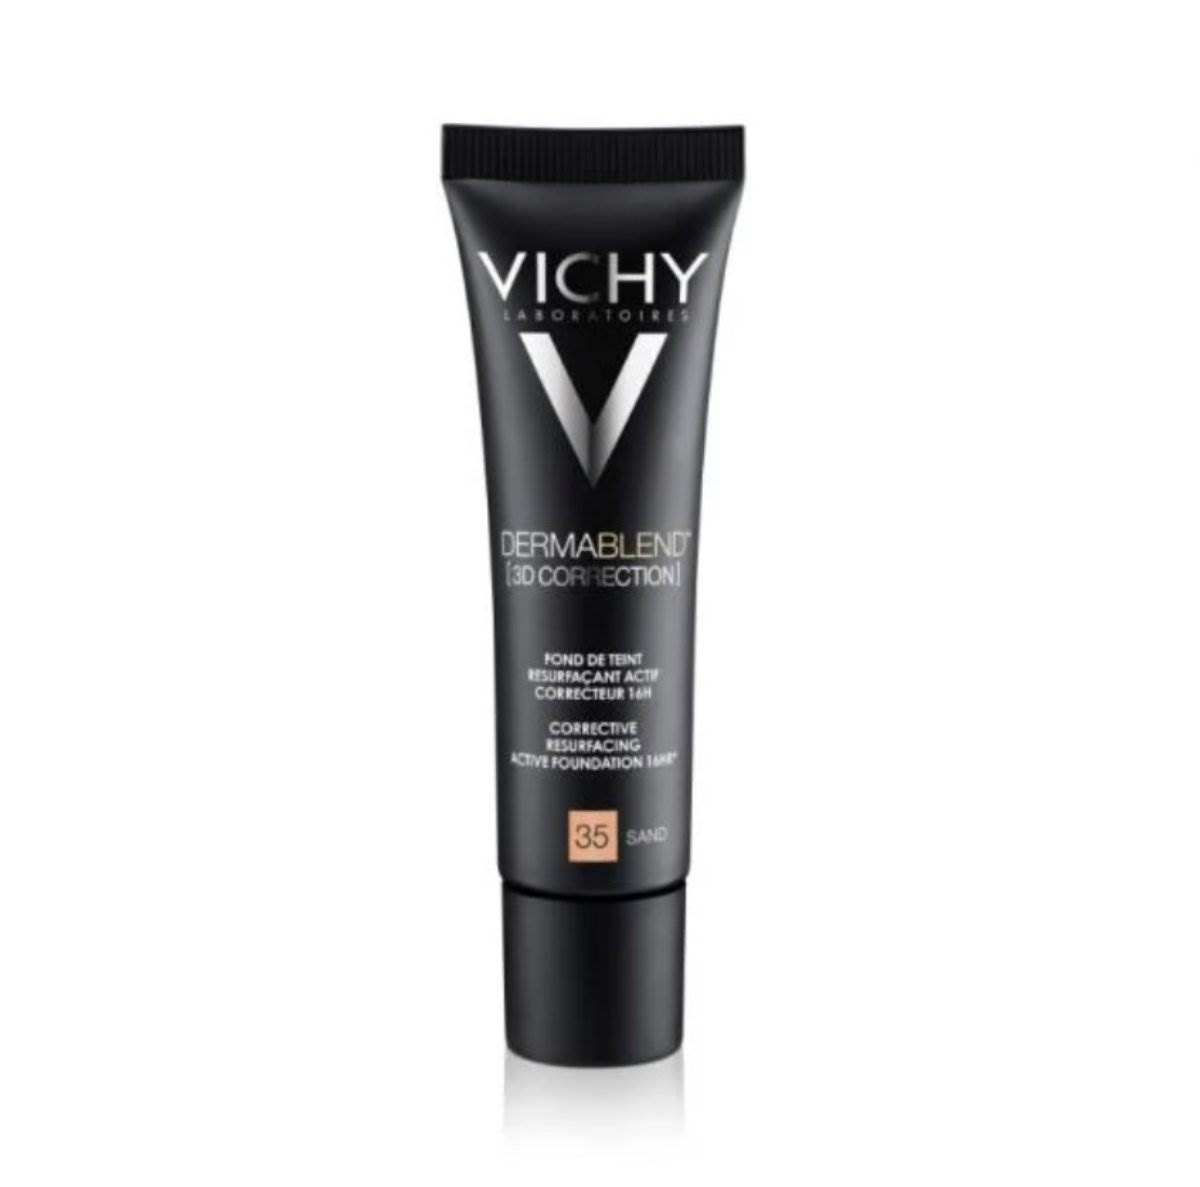  Vichy Dermablend 3D correction je jedan od najboljih za masnu kožu 